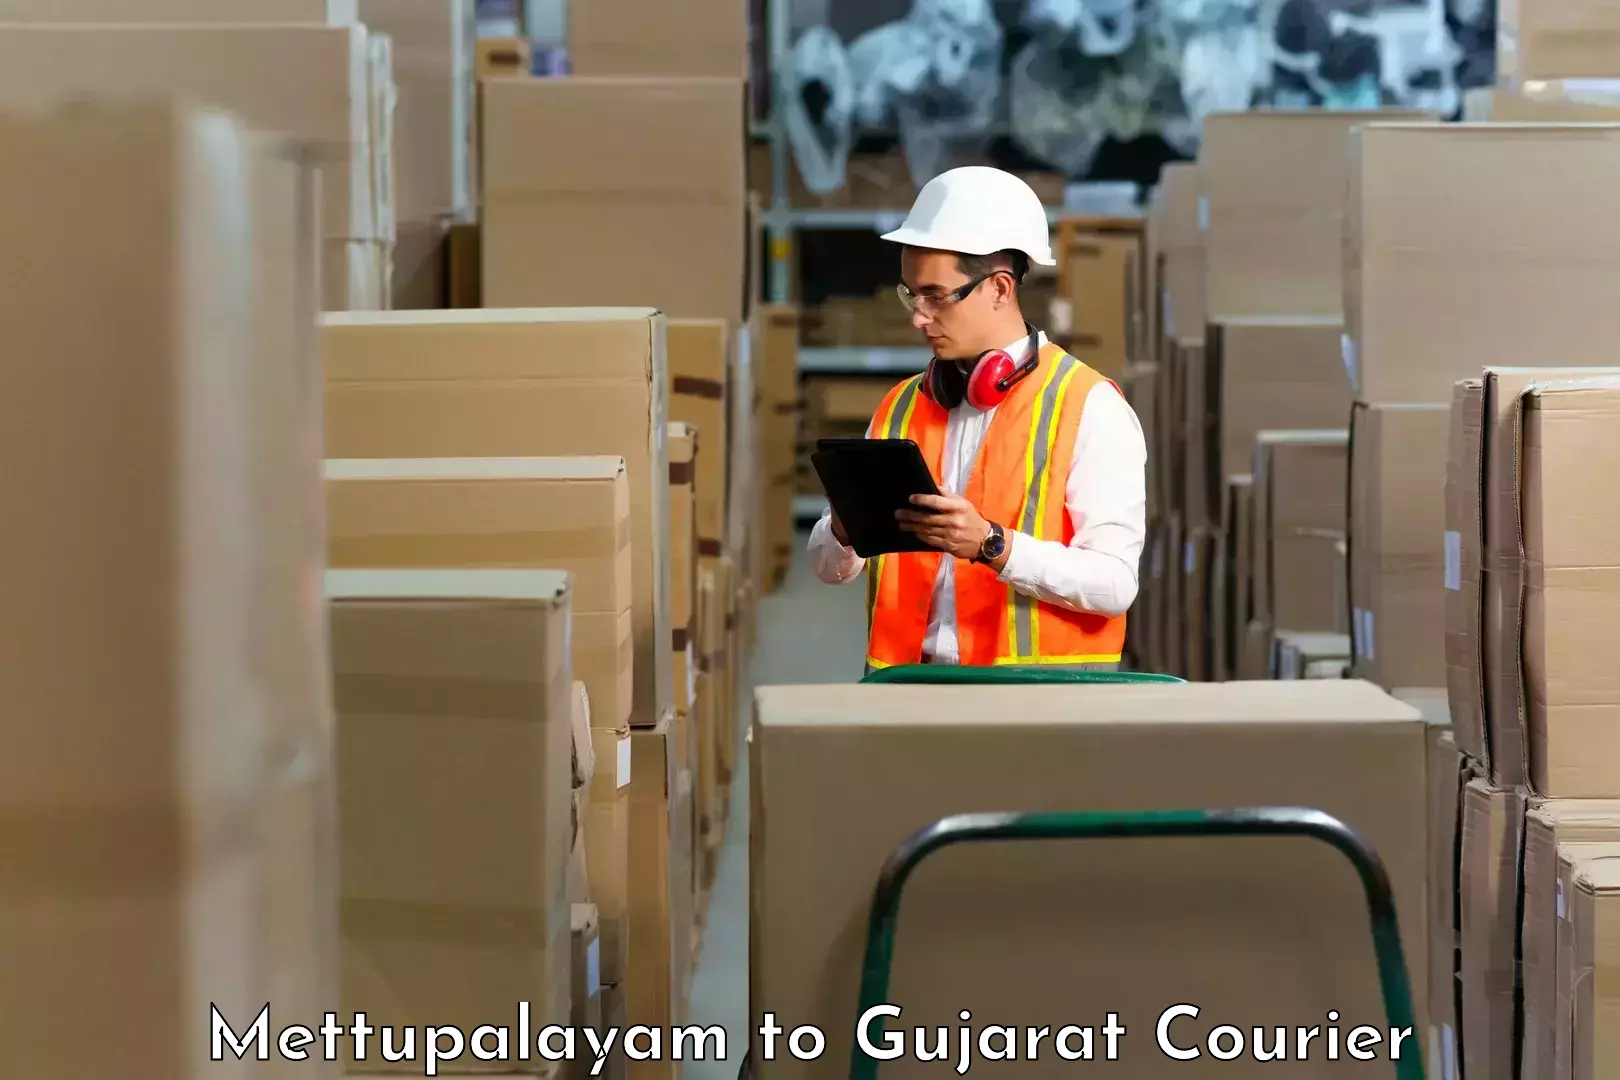 Reliable delivery network Mettupalayam to Savar Kundla